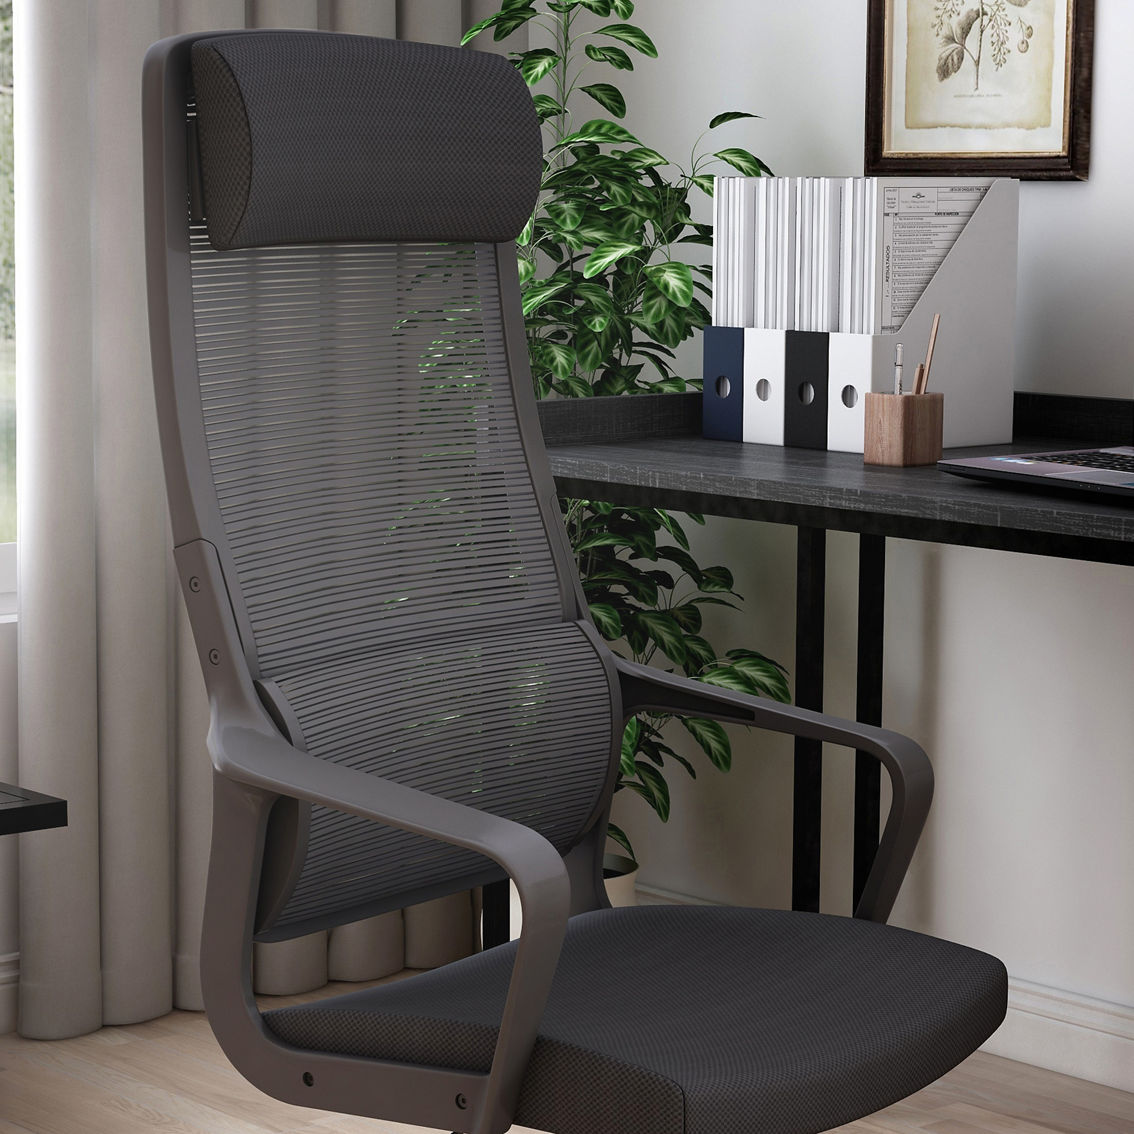 Furniture of America Tilih Black Mesh Office Chair - Image 2 of 3